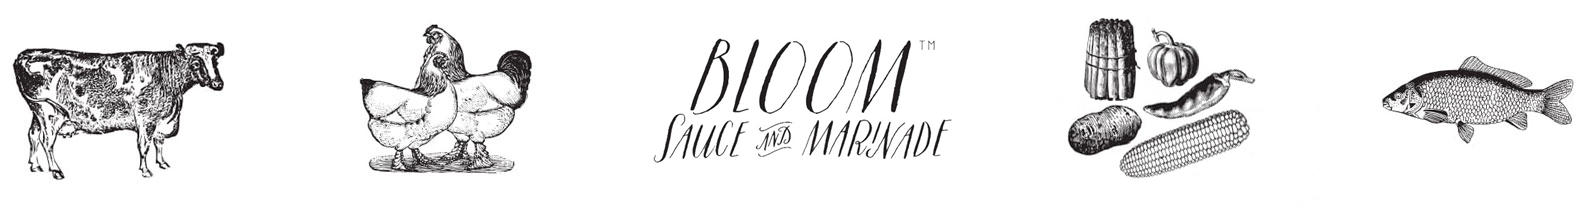 bloom-sauce-and-marinade-row-edited